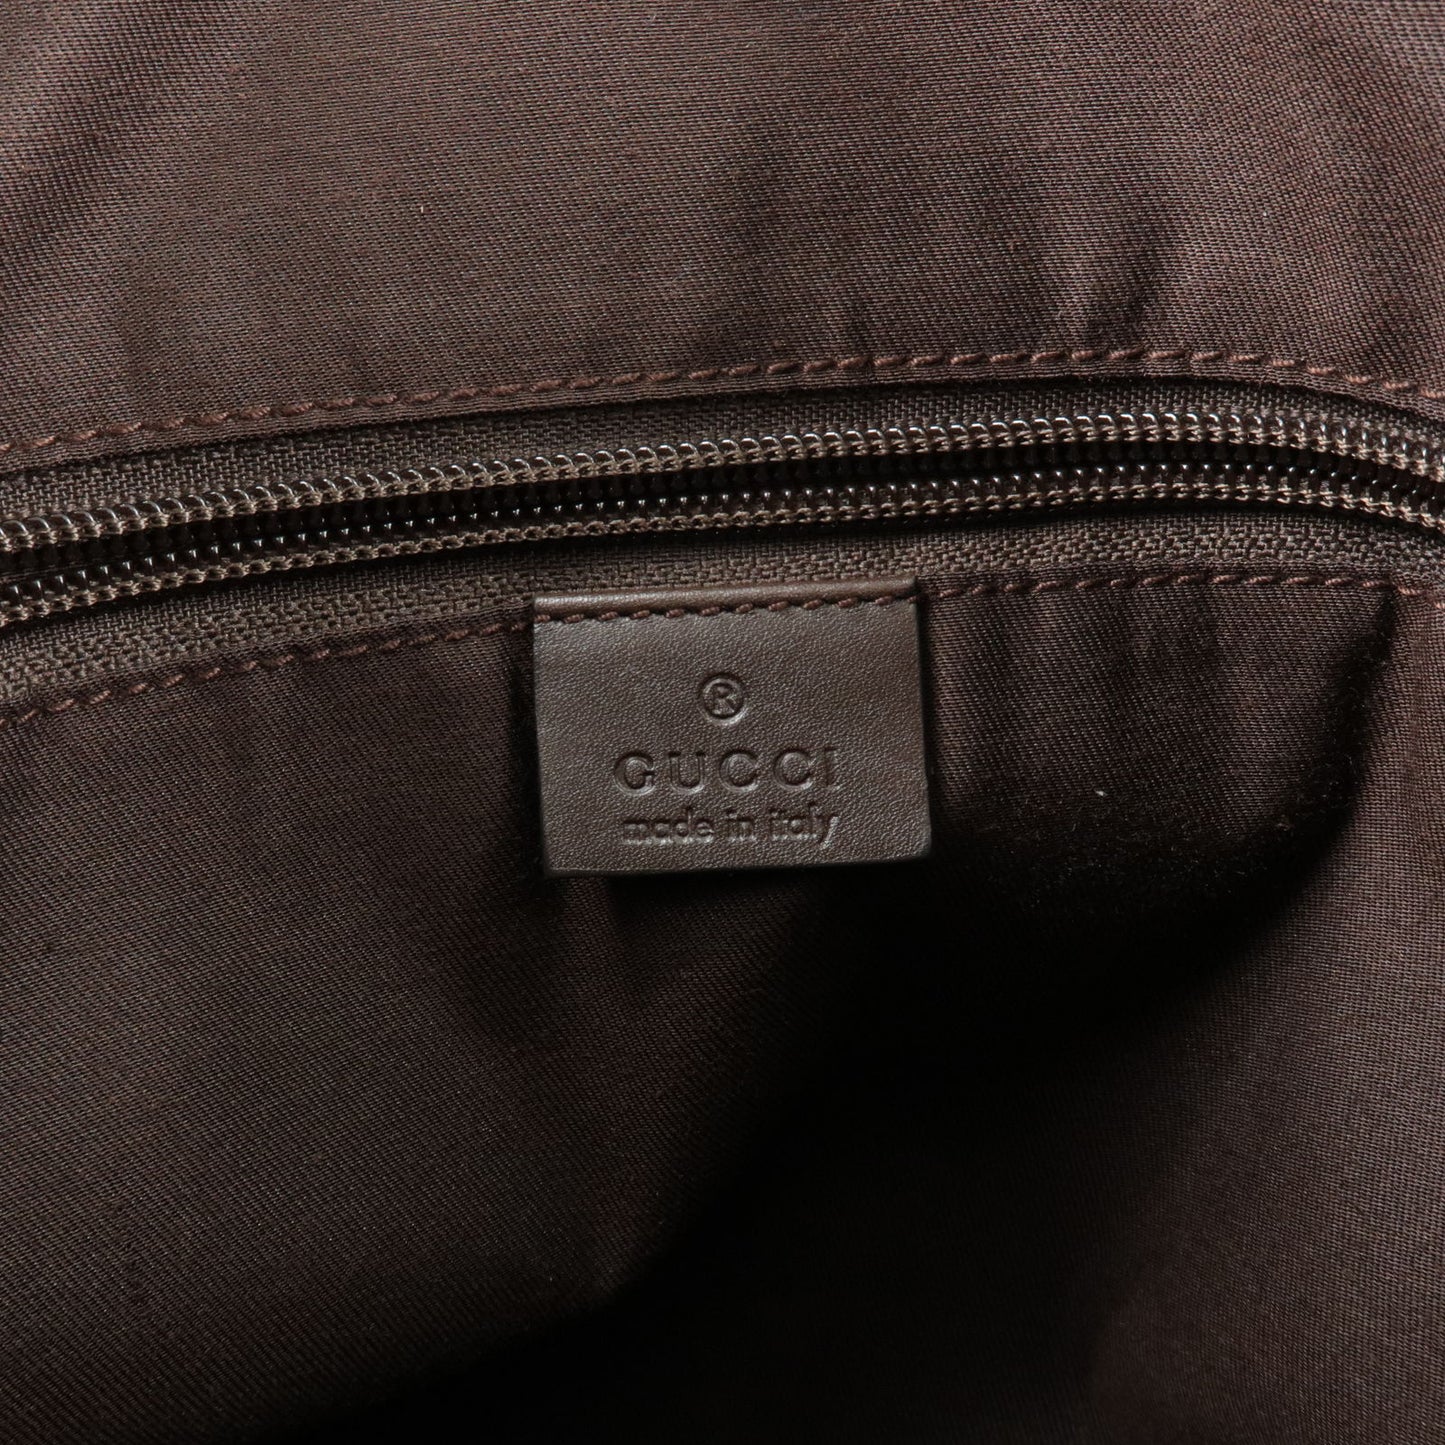 GUCCI GG Canvas Leather Shoulder Bag Beige Brown 145857